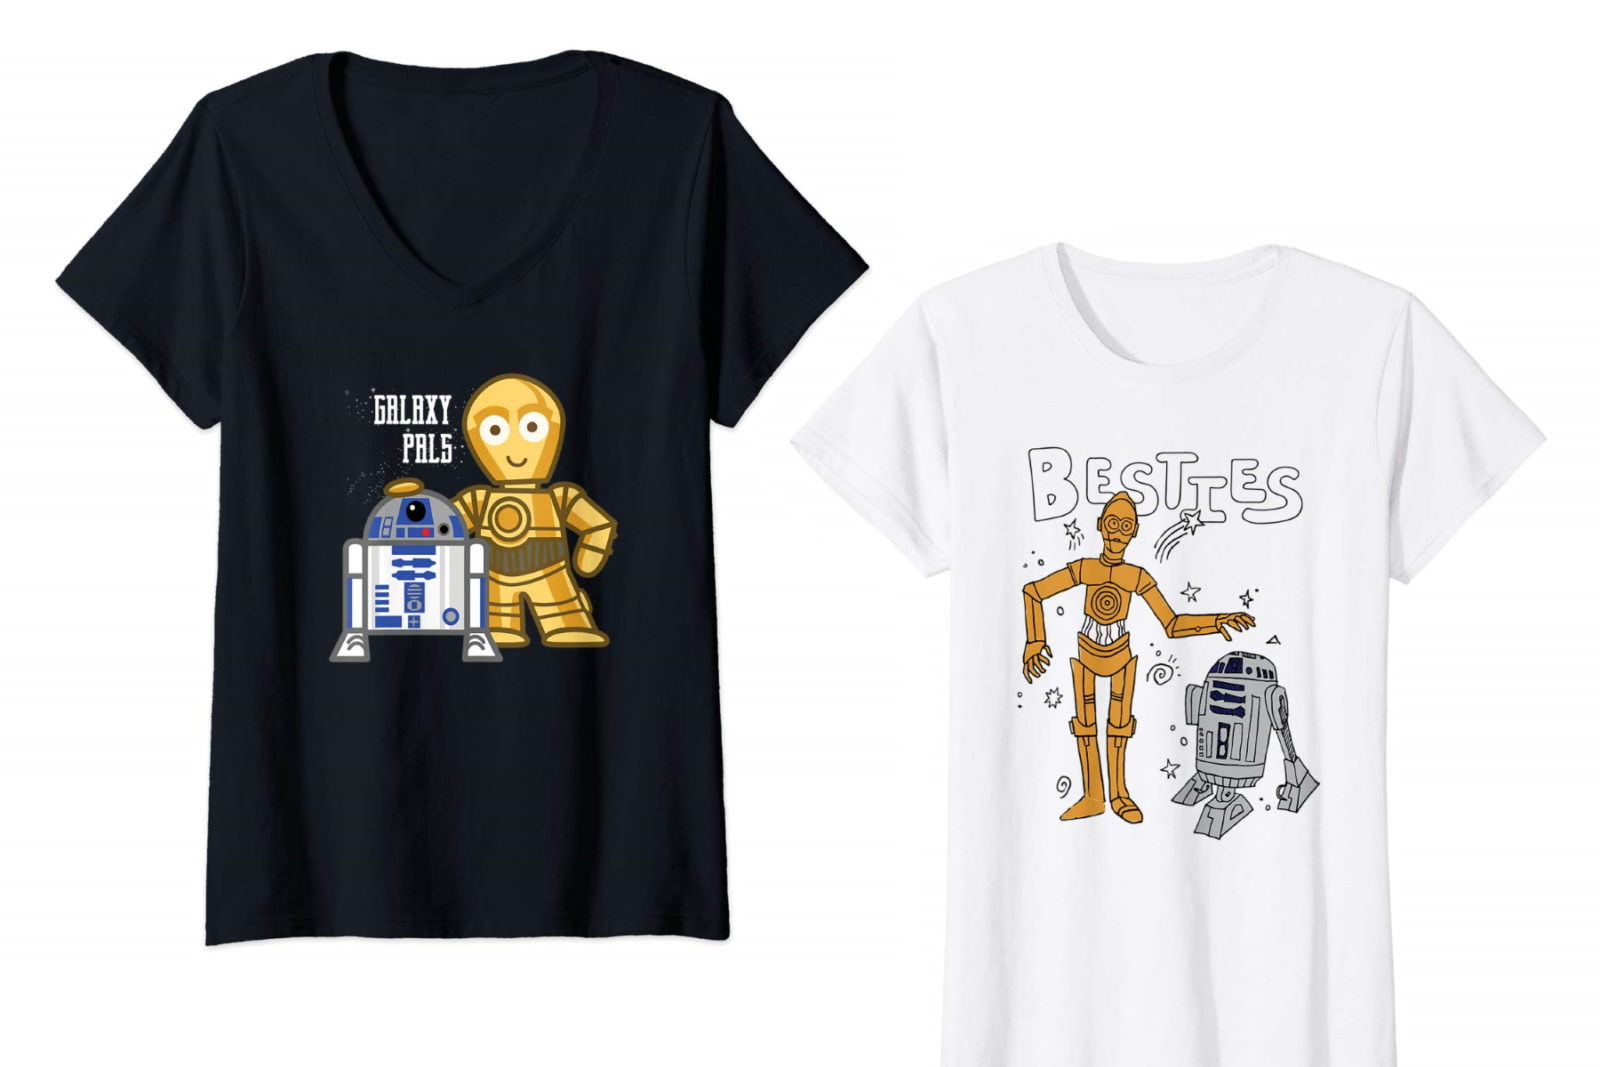 Women's Star Wars C-3PO & R2-D2 T-shirts on Amazon